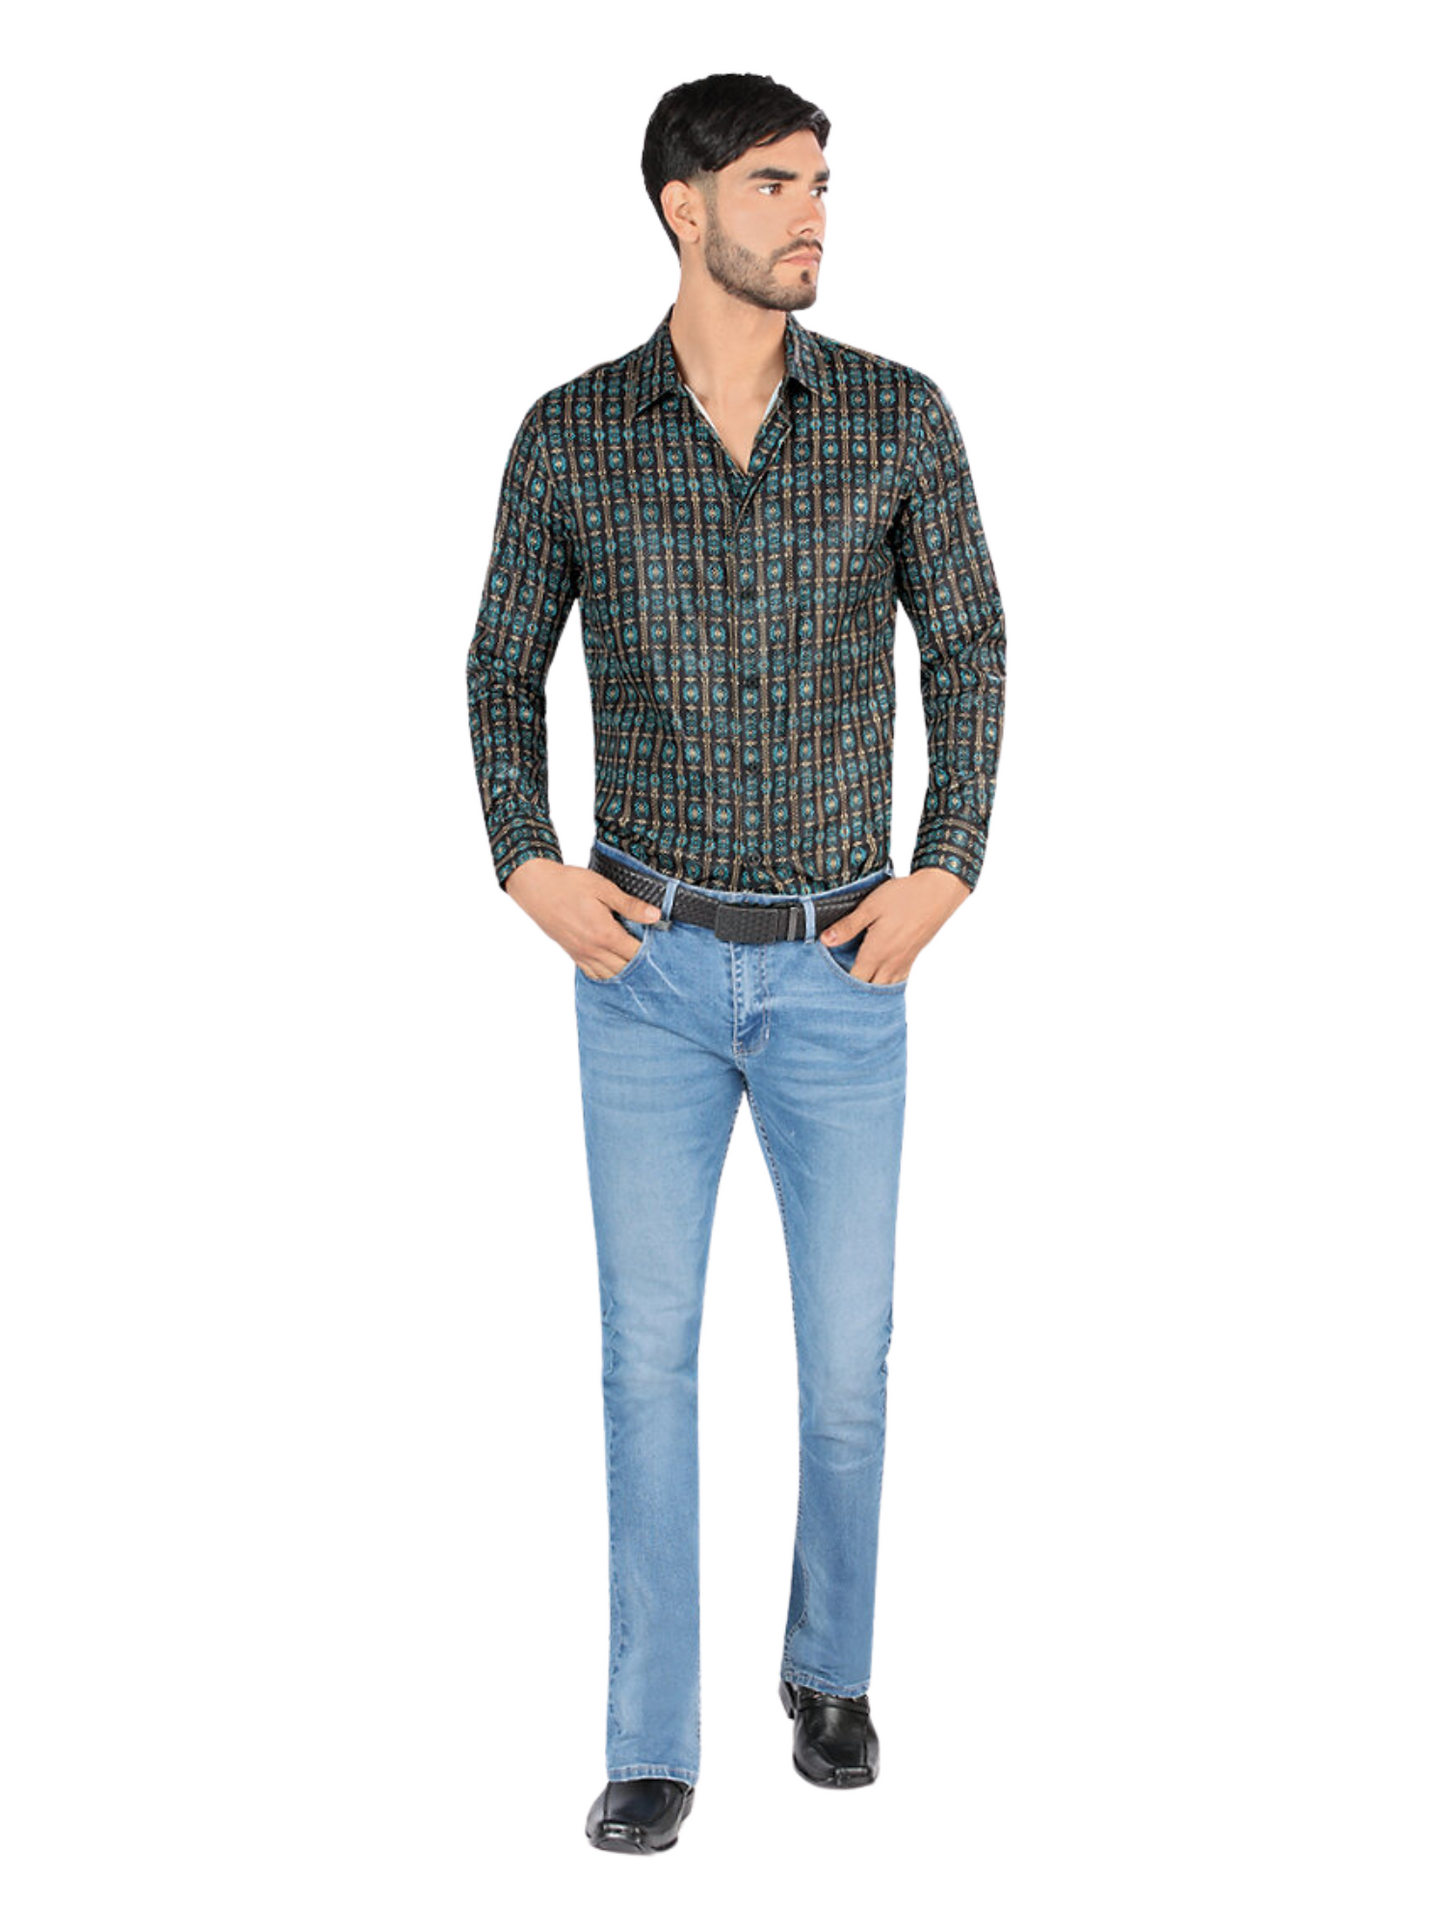 Stretch Denim Jeans for Men 'Montero' - ID: 5312 Denim Jeans Montero Light Blue